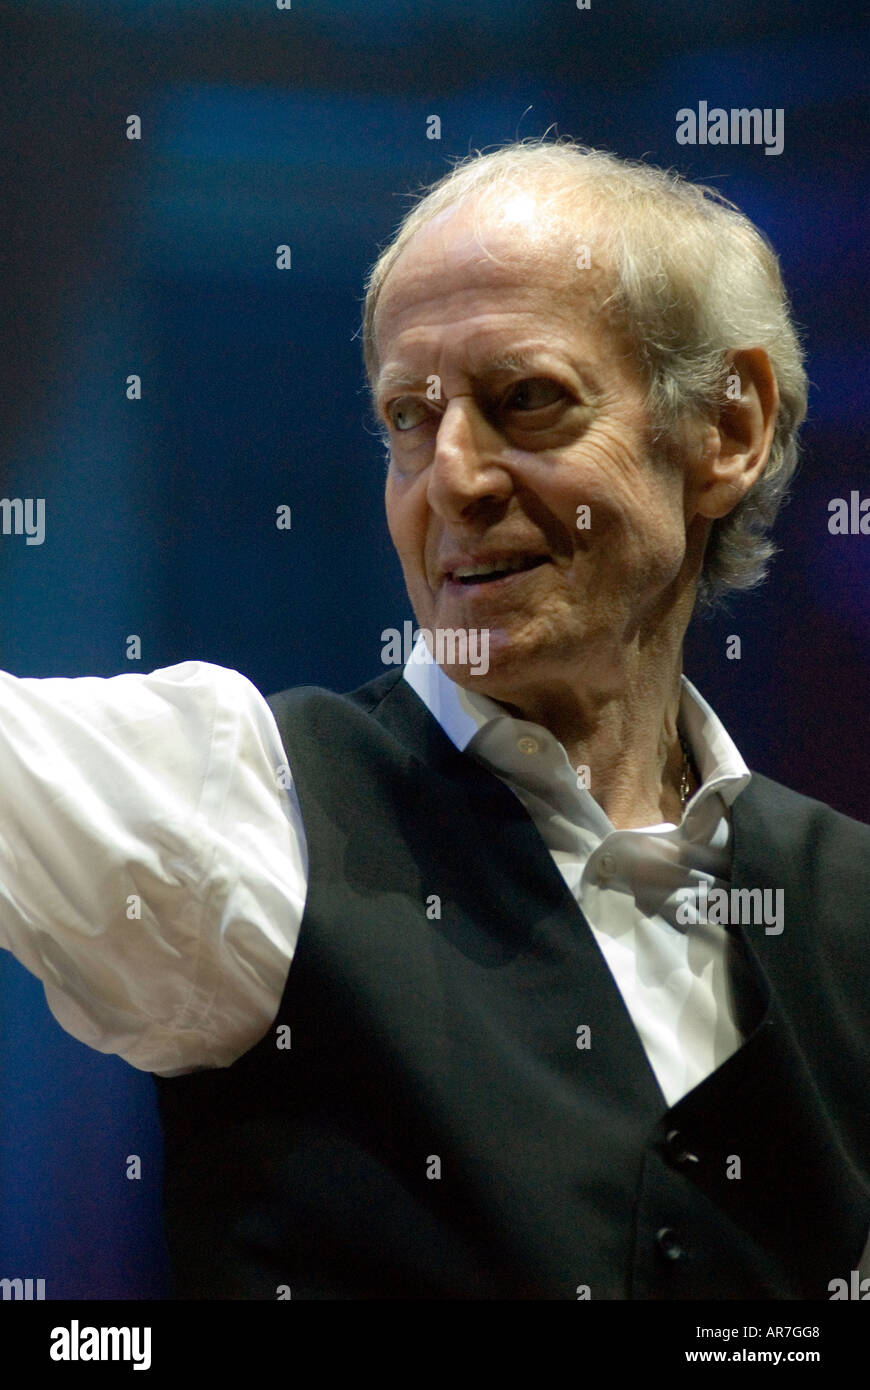 Oscar winning British film composer John Barry in concert at Royal Albert Hall London 28th September 2006 Stock Photo